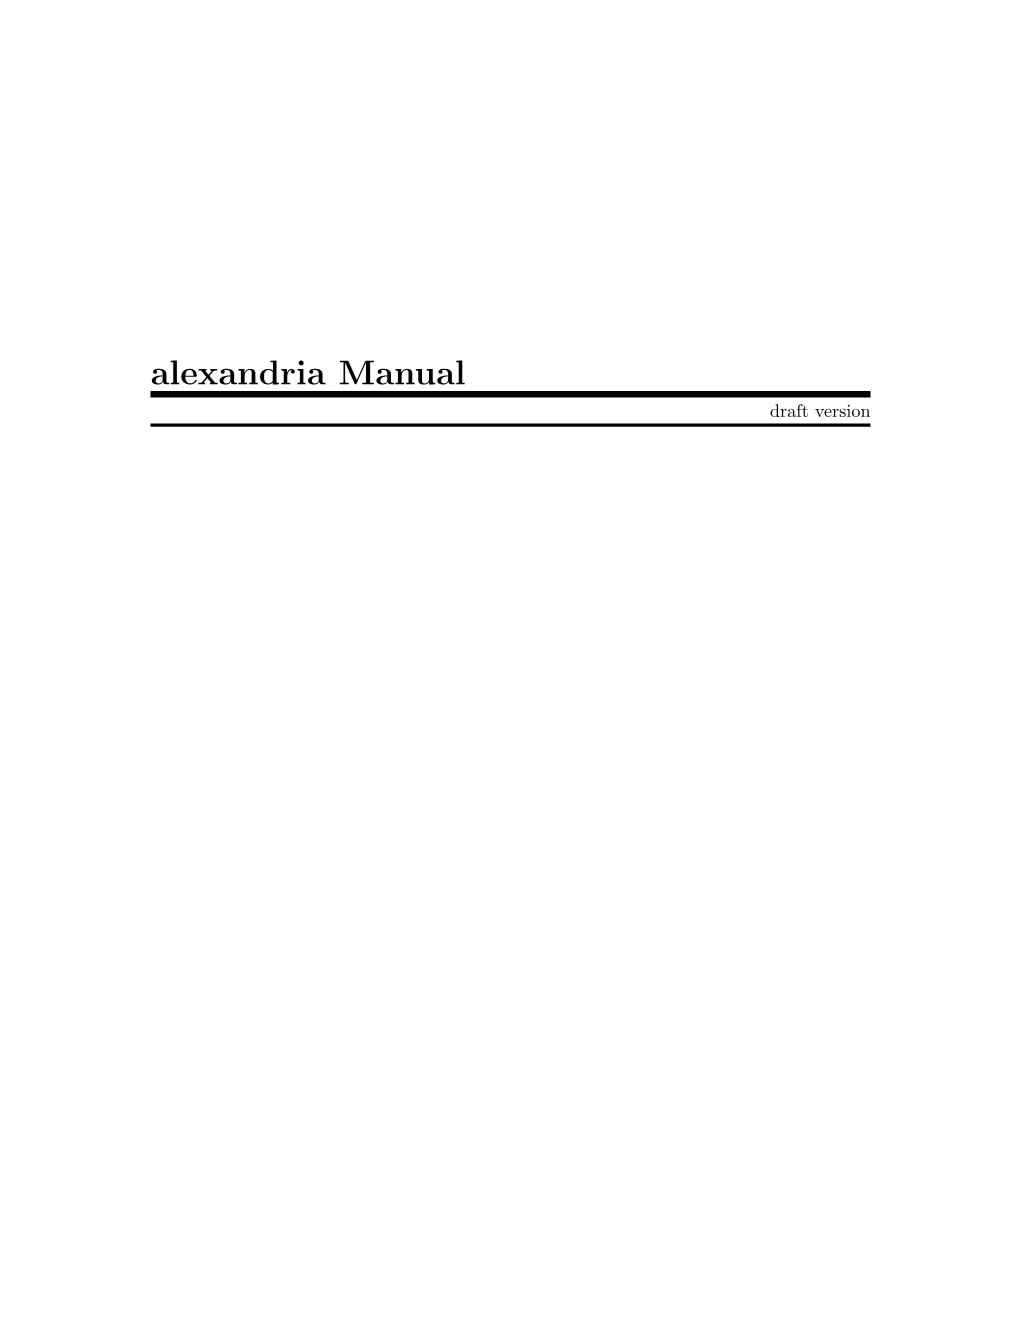 Alexandria Manual